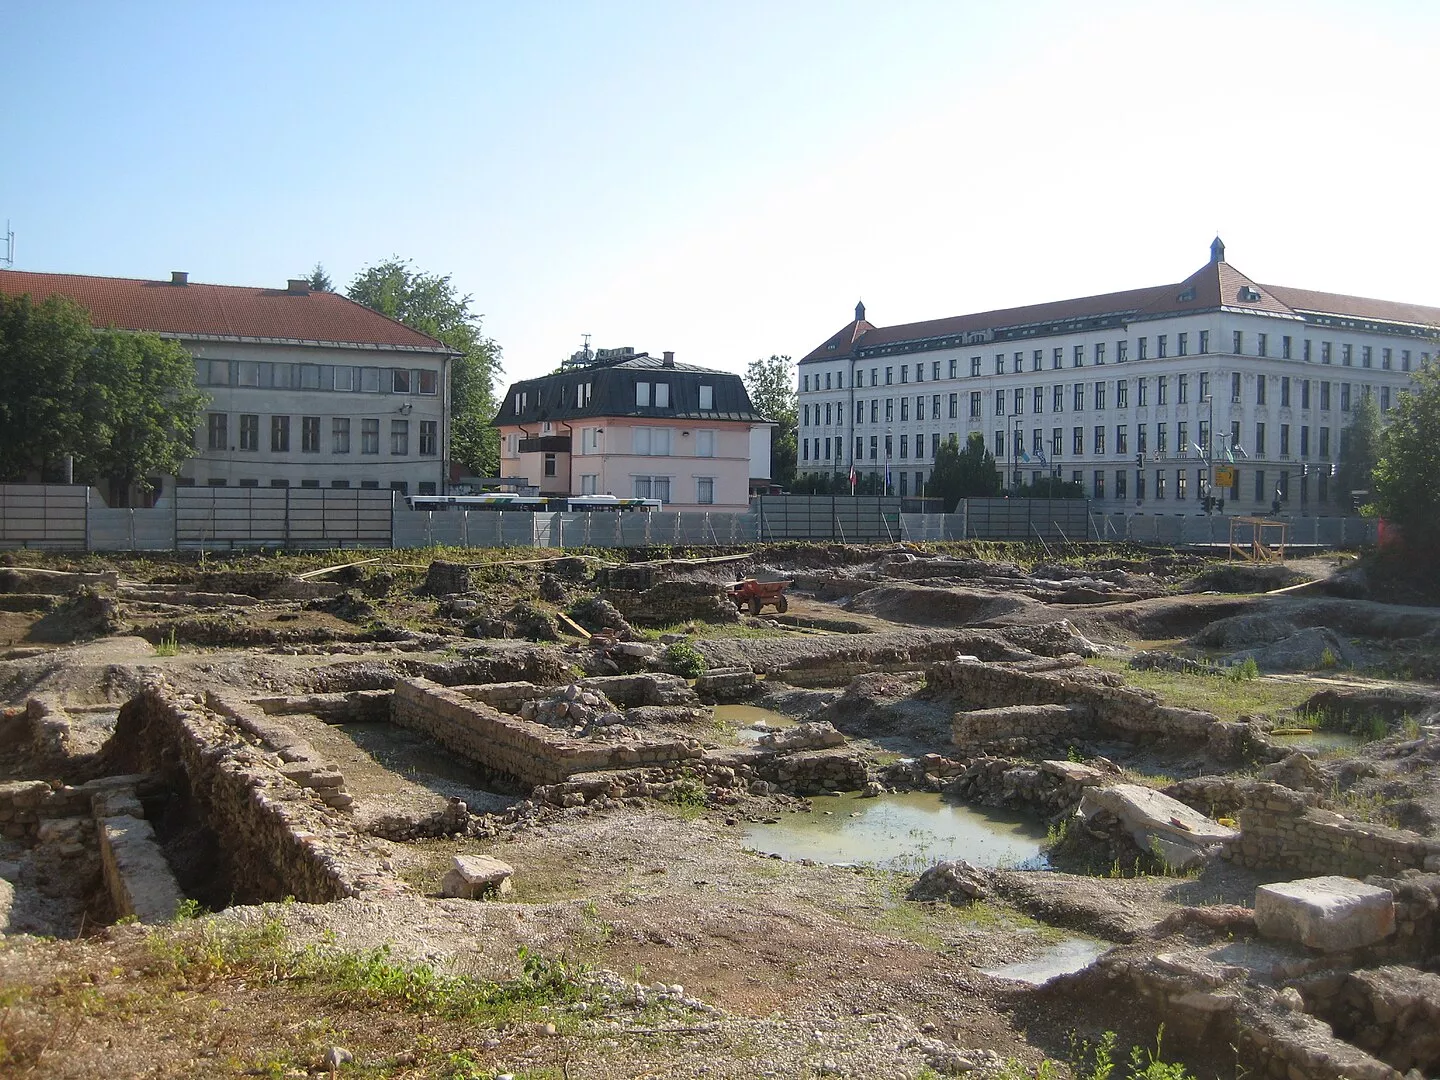 Part of the Ancient Roman town of Emona at the crossroad of Slovene Street and Zois Street - Ljubljana - Slovenia